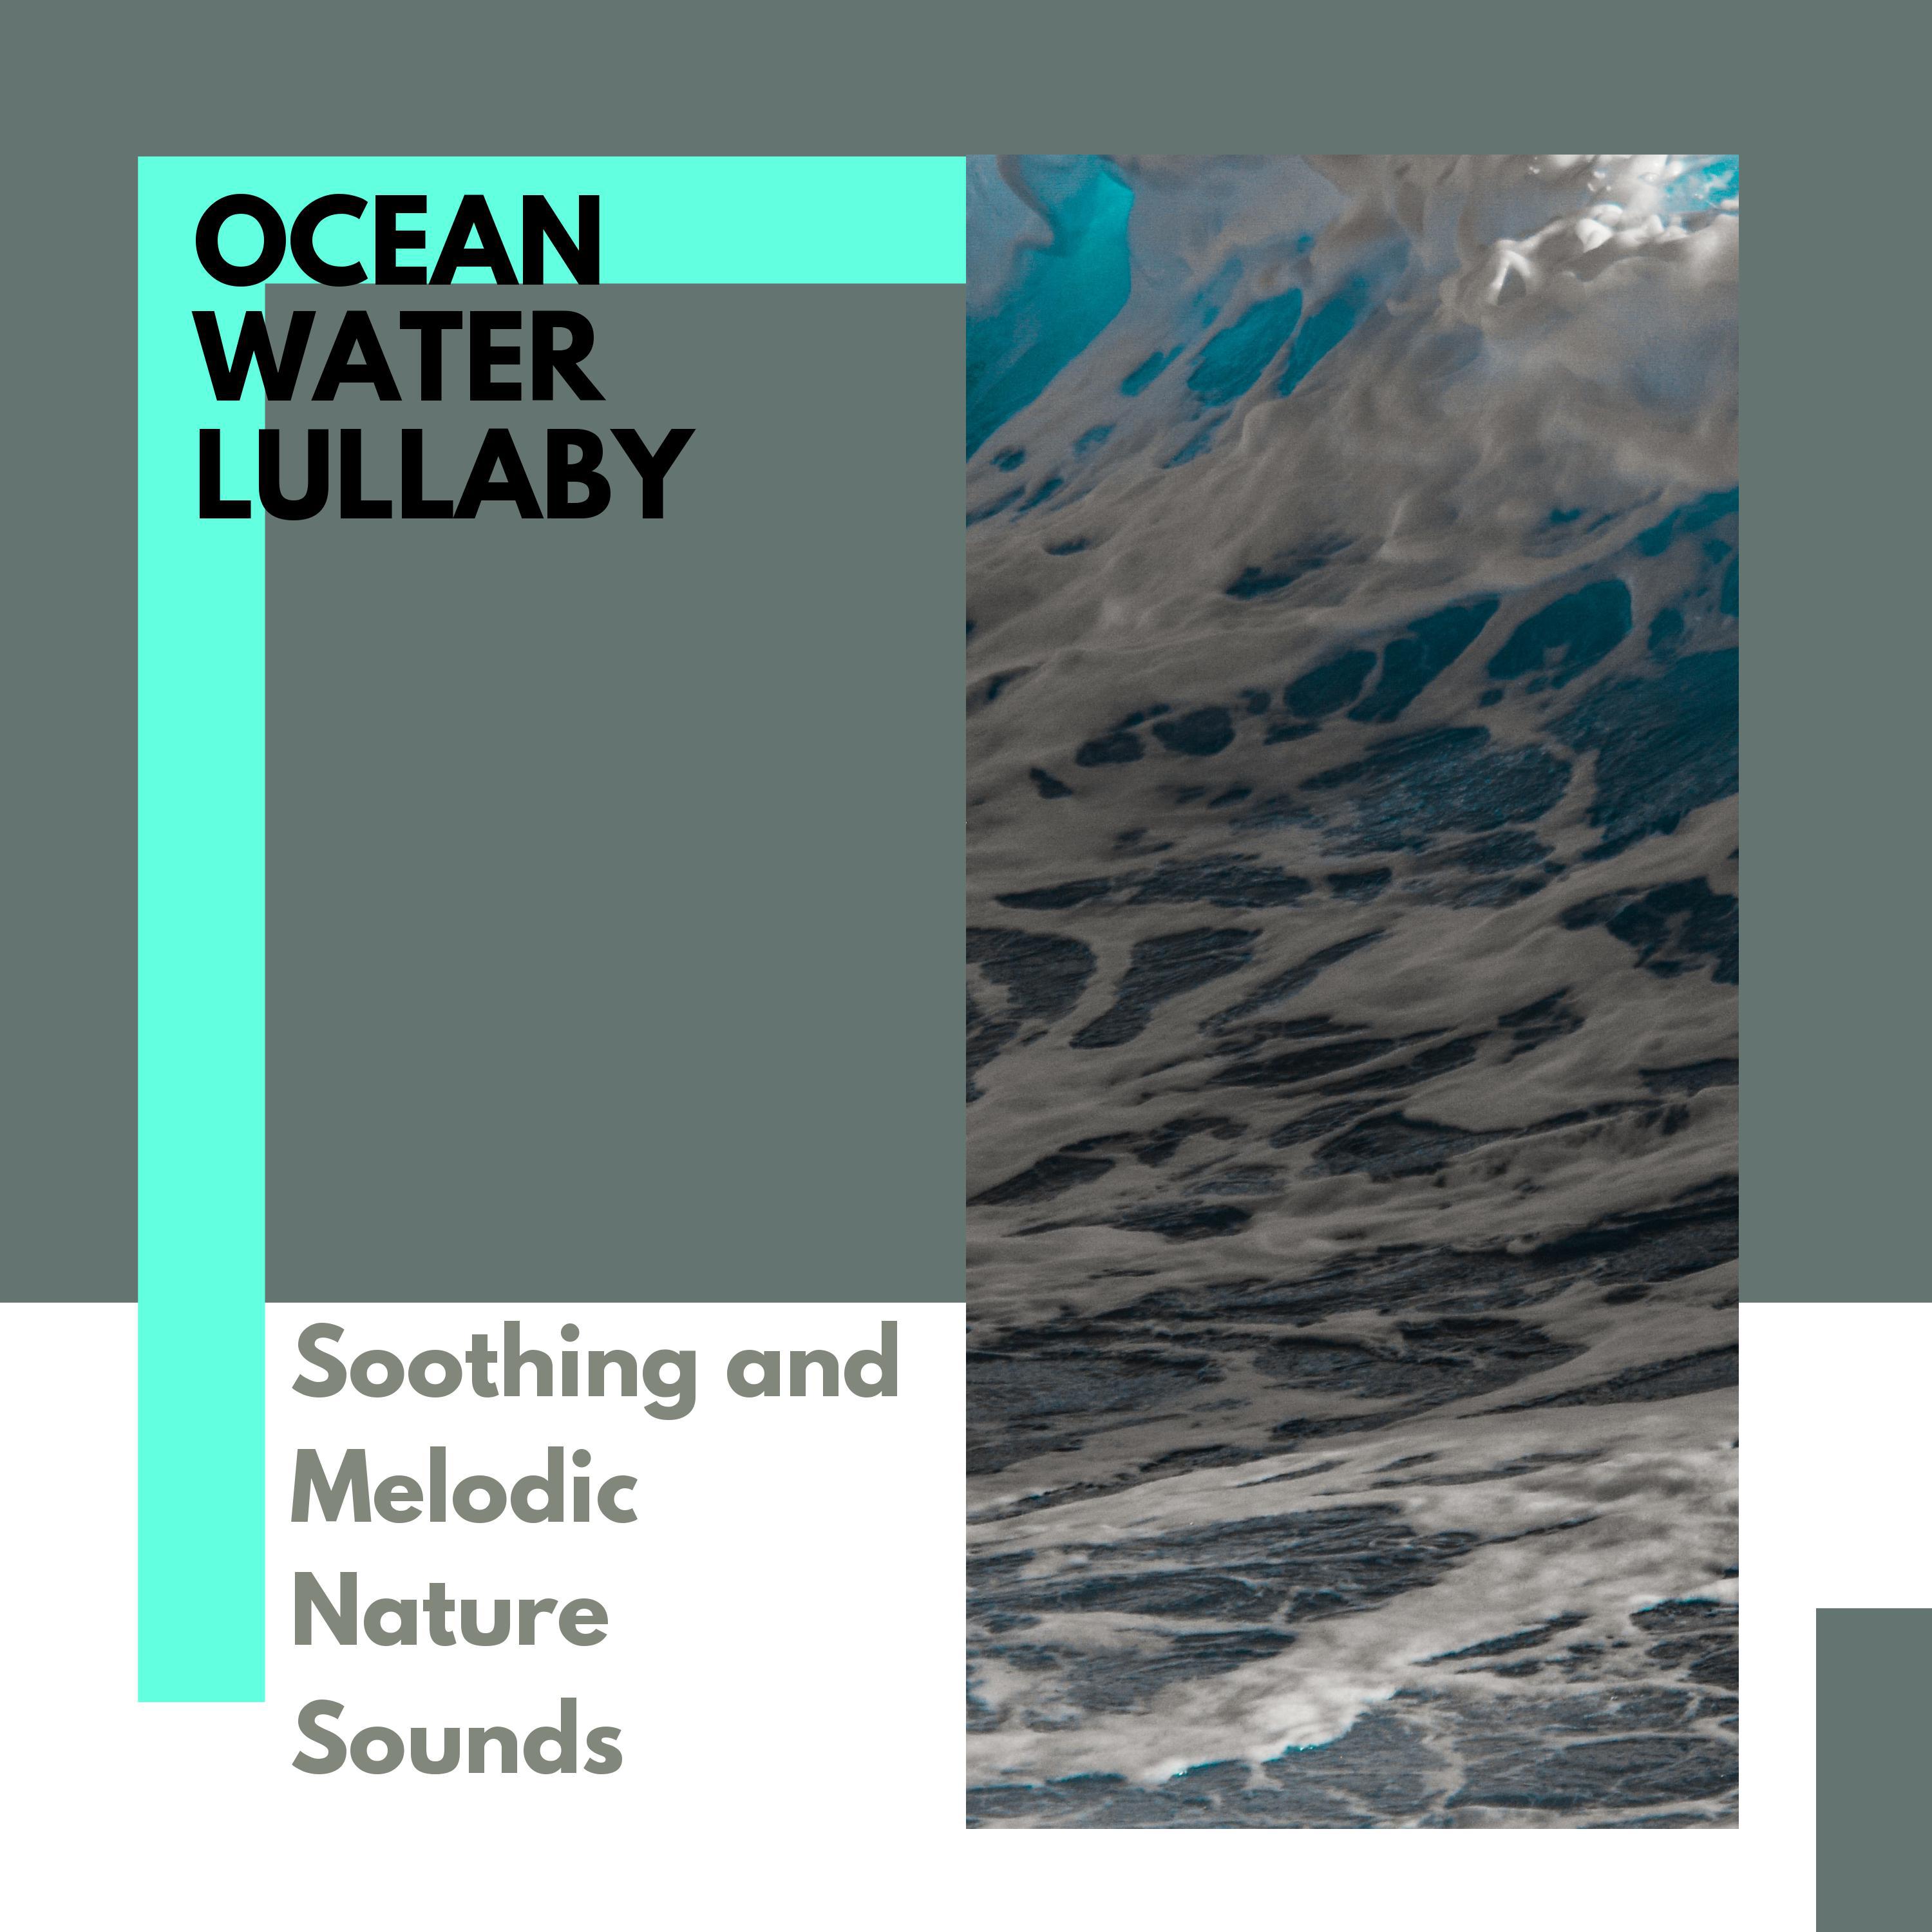 Suburban Winds Nature Sounds - Joyful Oceanic Waves Motion